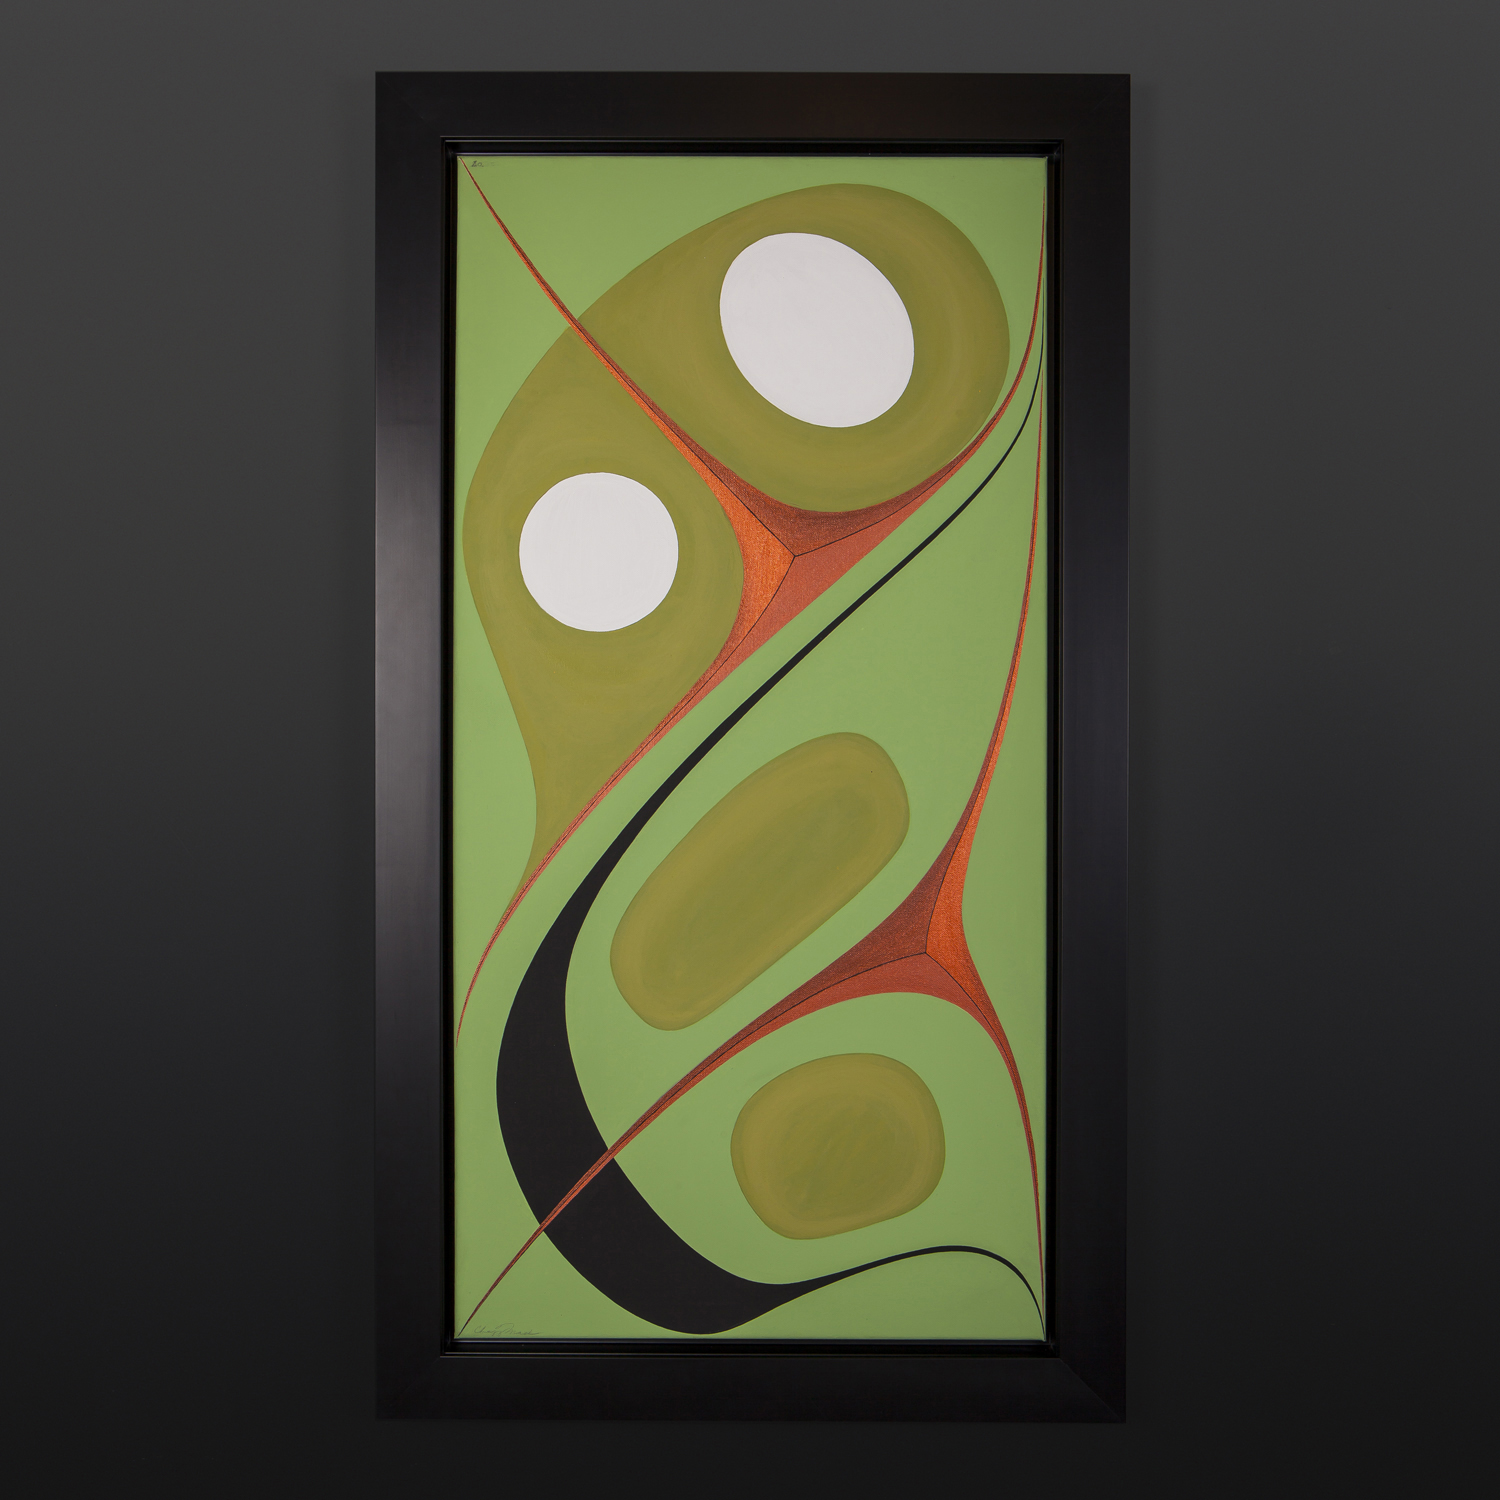 Wealth Chazz Mack Nuxalk Framed acrylic on canvas 40½" x 22½" x 2" $3200